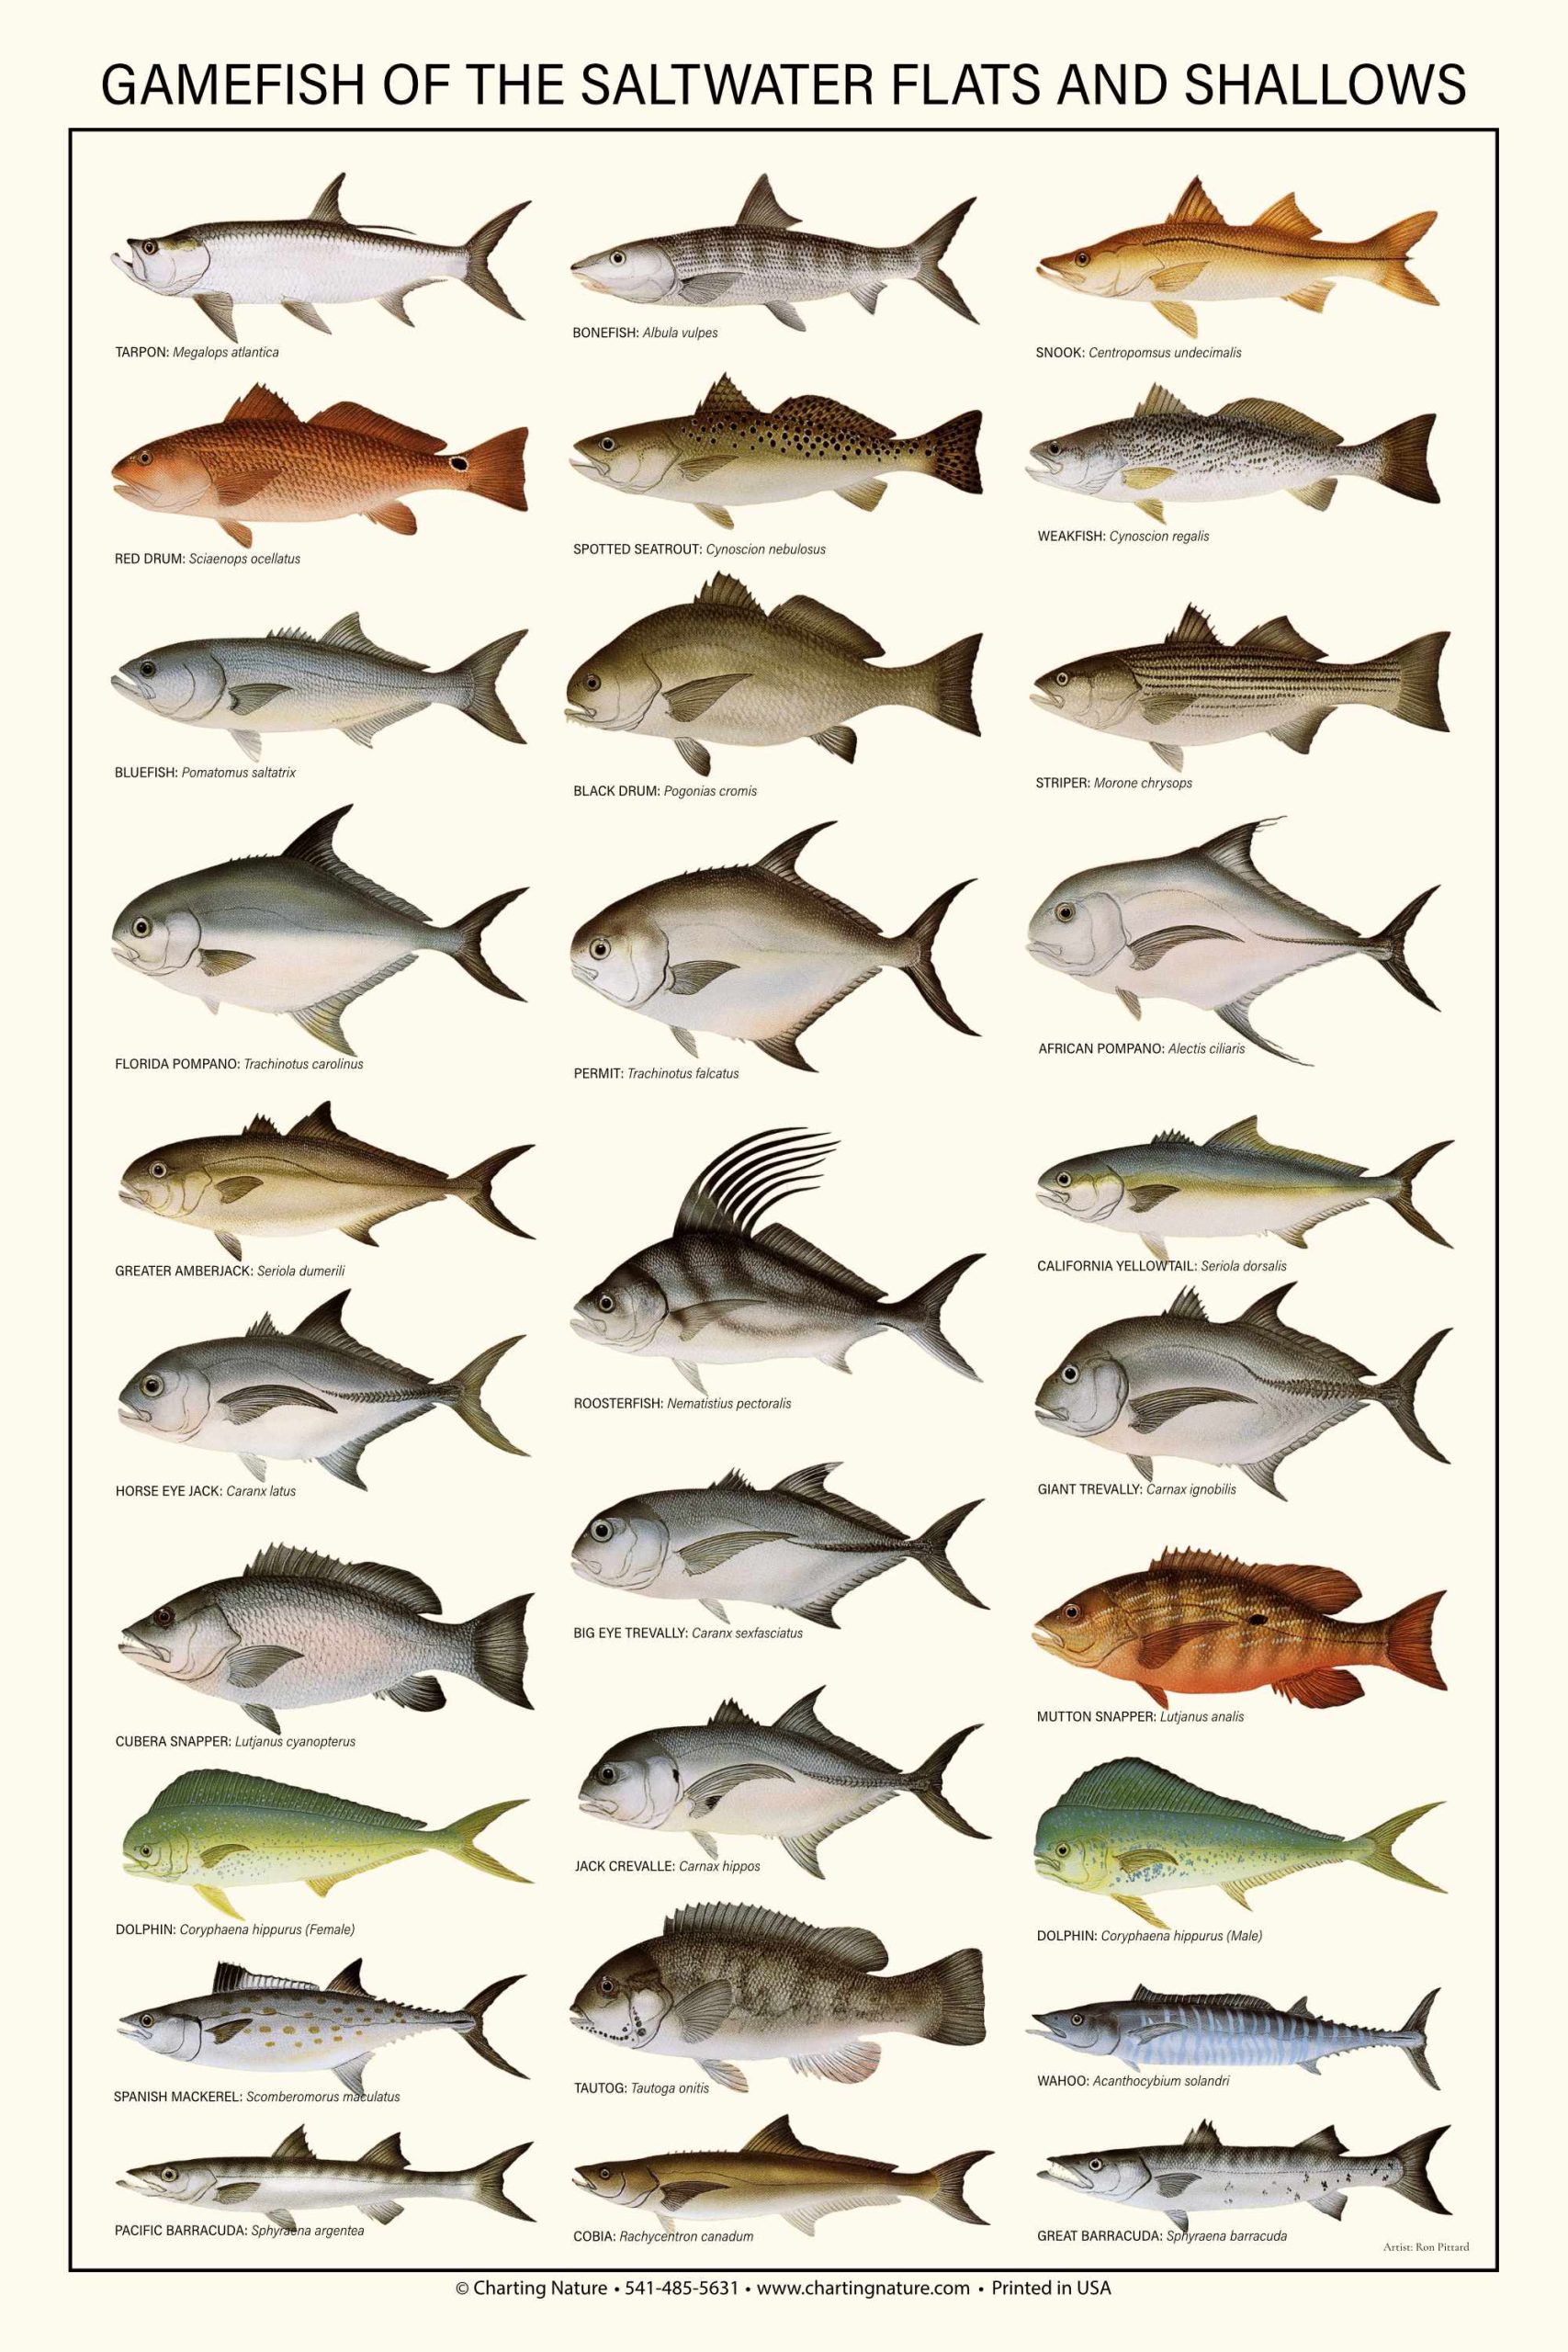 11 saltwater fish records broken between Oct. 2021 to Oct. 2022: Alabama  Gulf Seafood